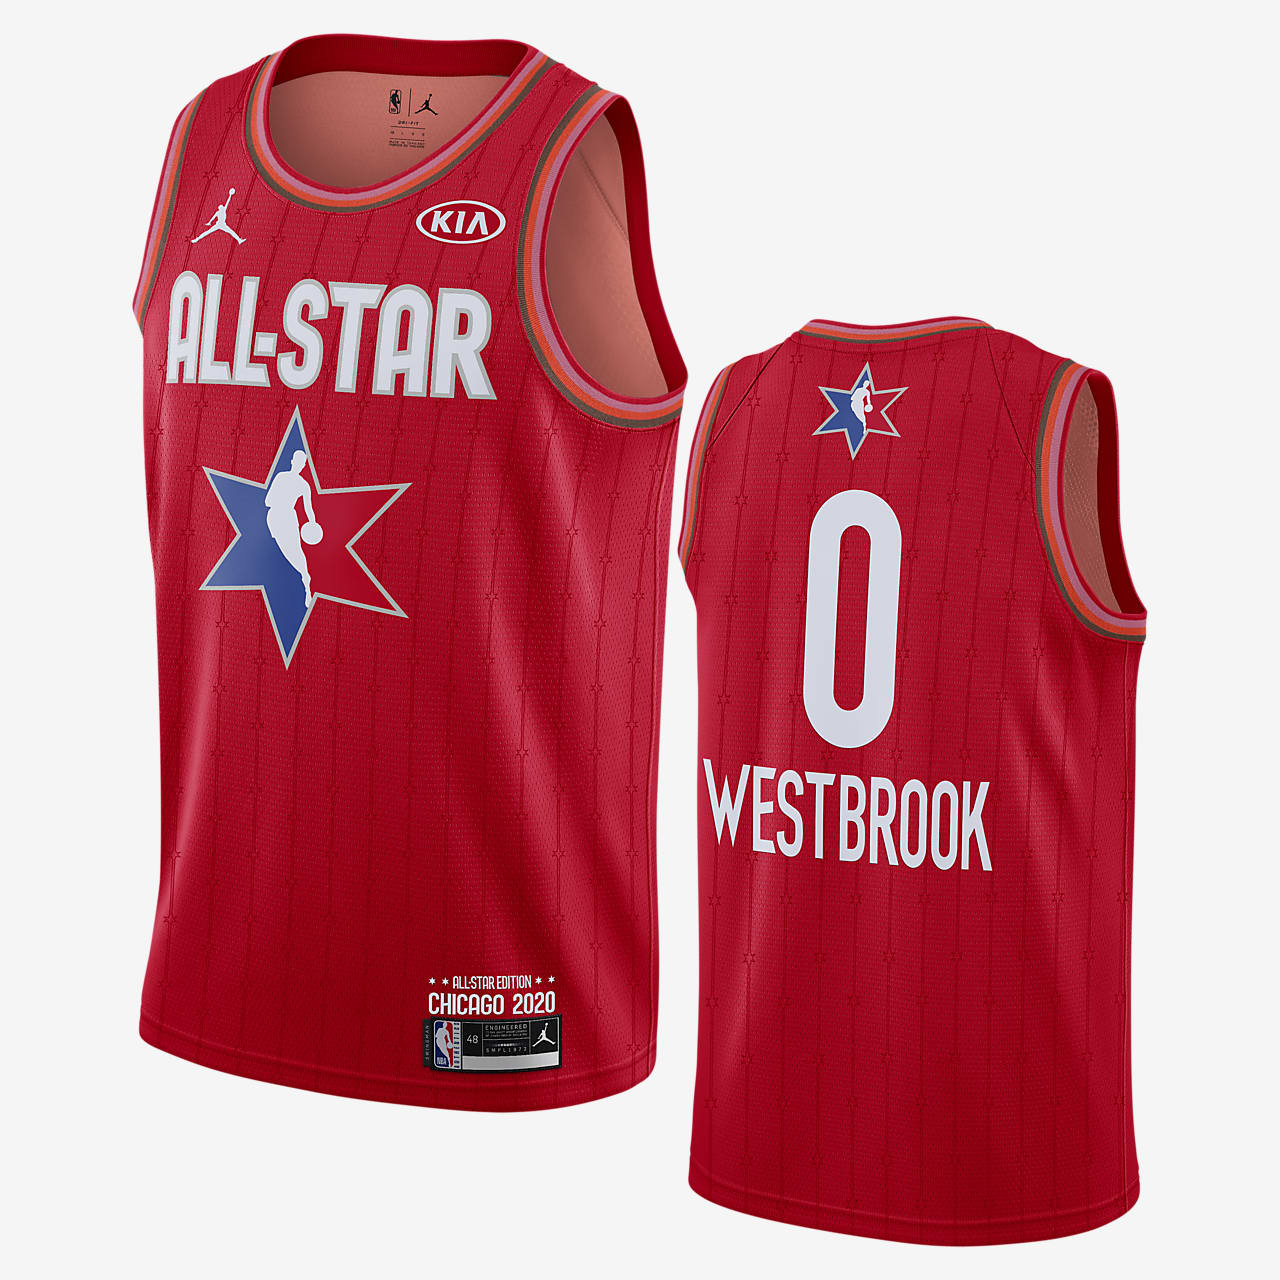 westbrook kids jersey